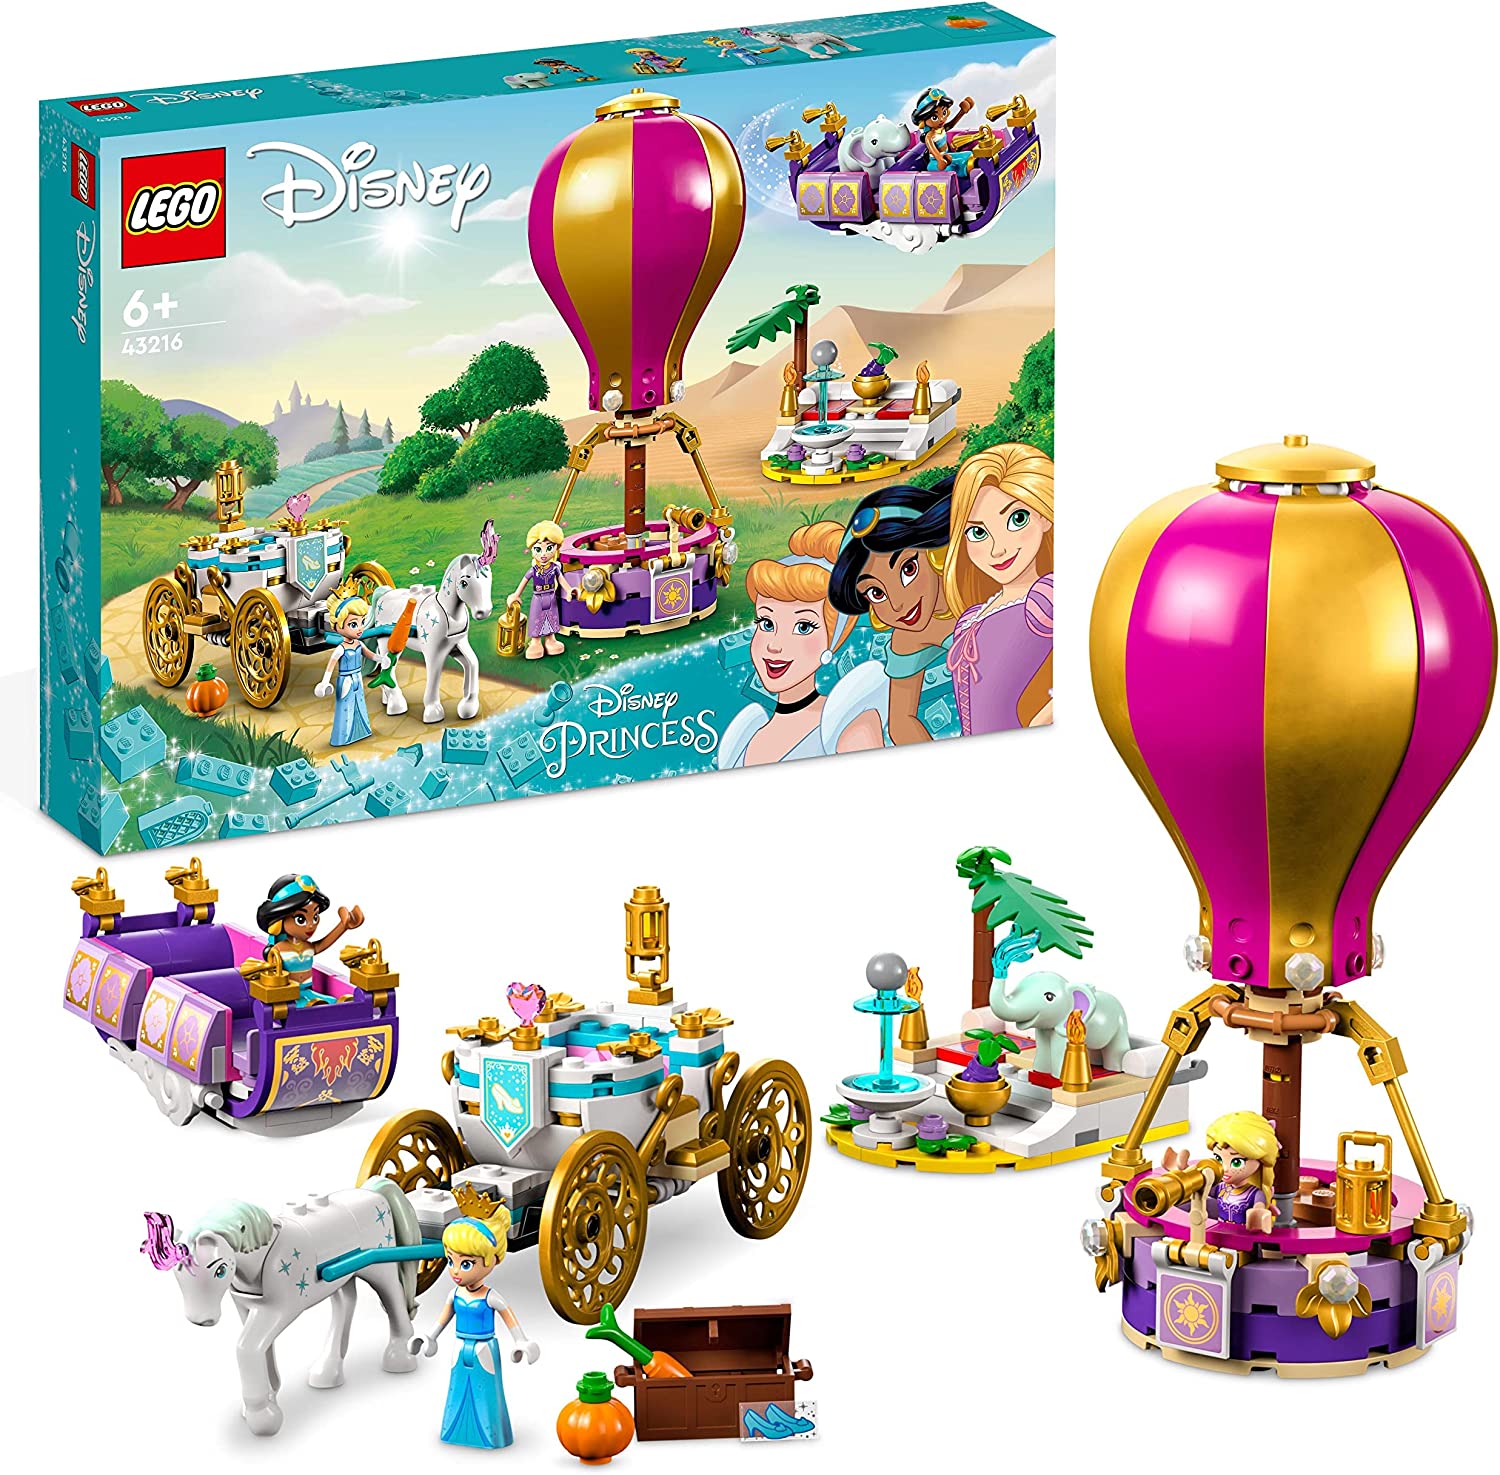 LEGO 43216 Disney Princess Magic Travel Toy with Cinderella, Jasmine, Rapunzel Mini Dolls, Toy Horse & Carriage, Flying Rug, Hot Air Balloon for Girls and Boys